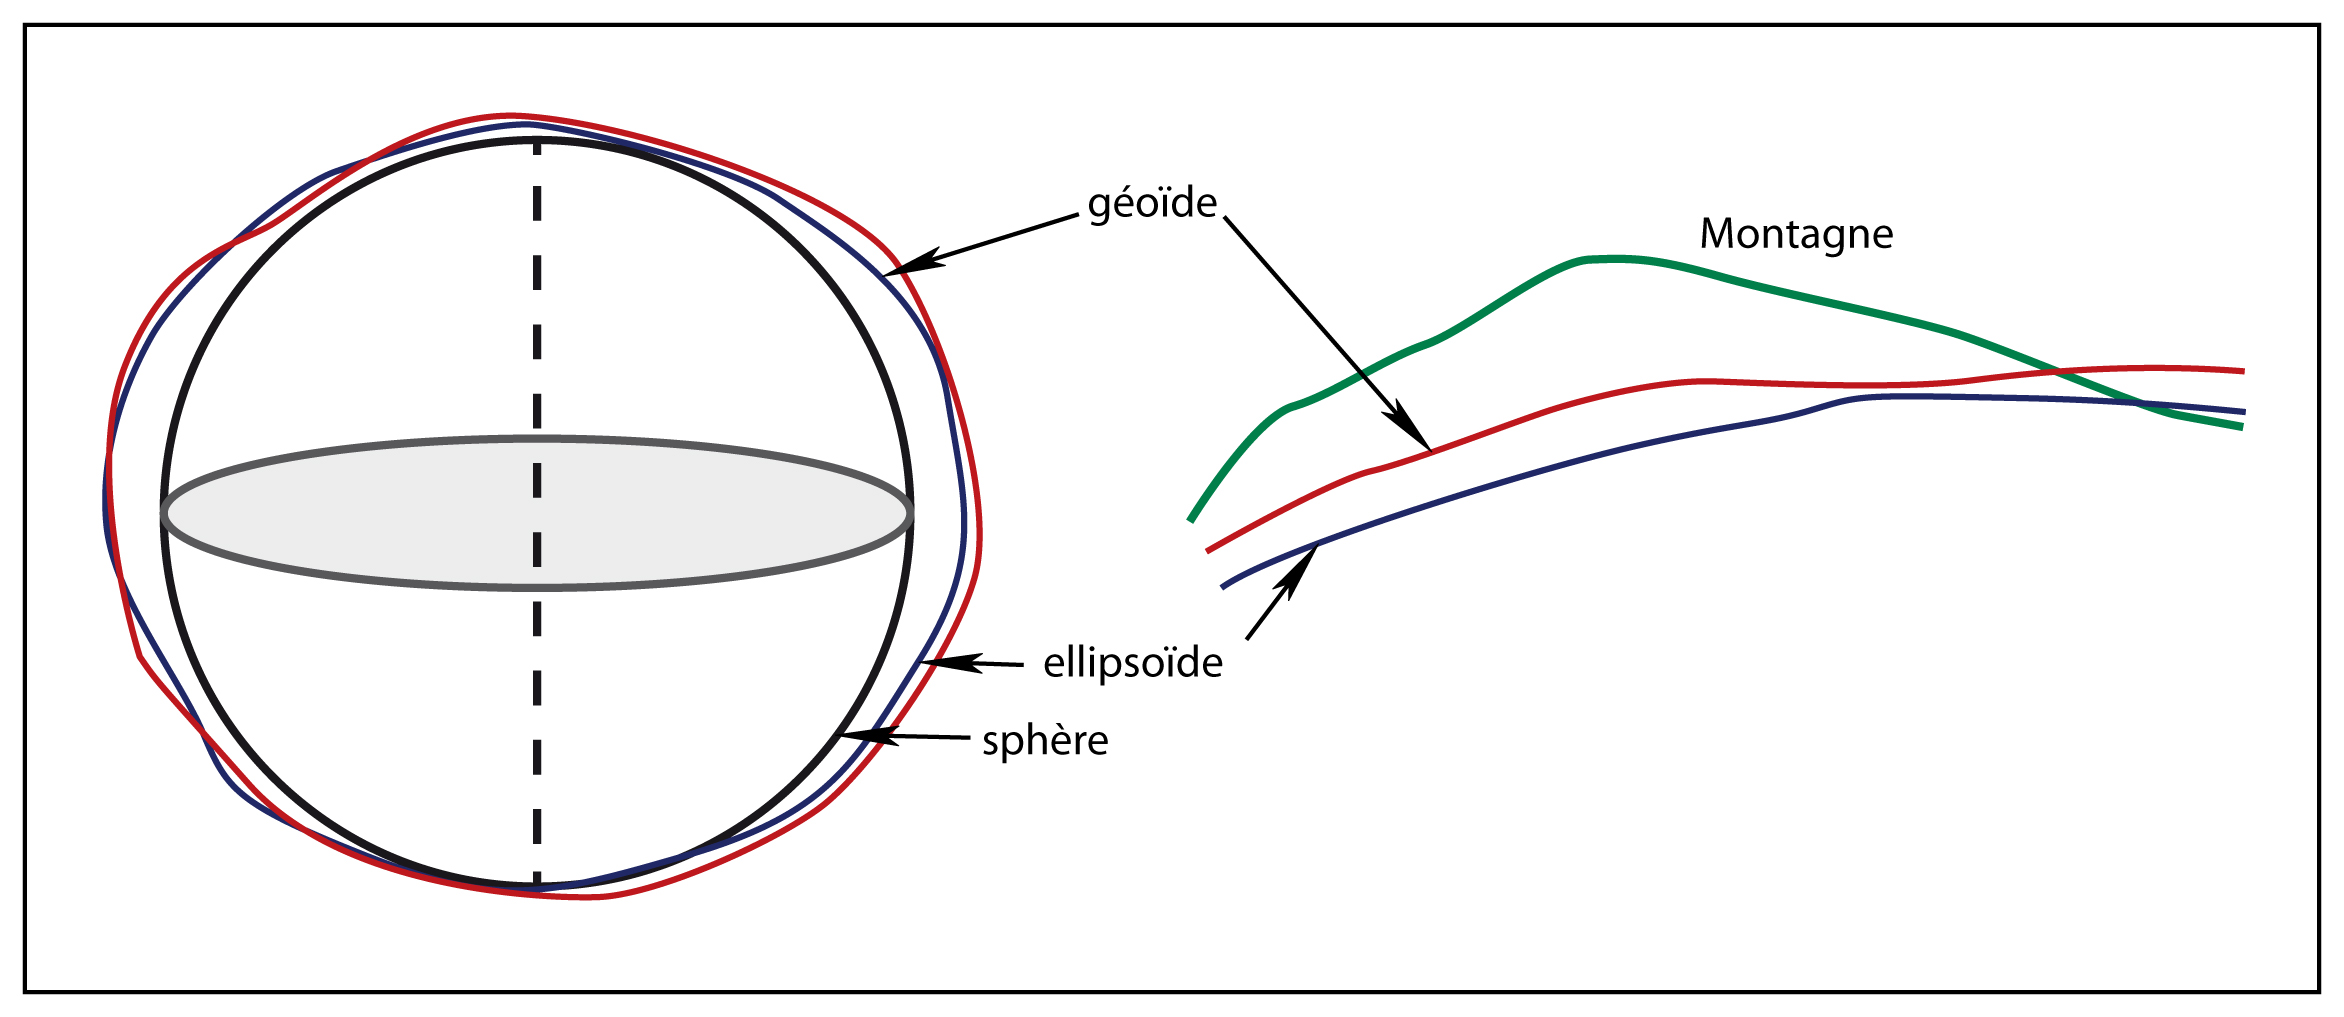 ellipsoide definition